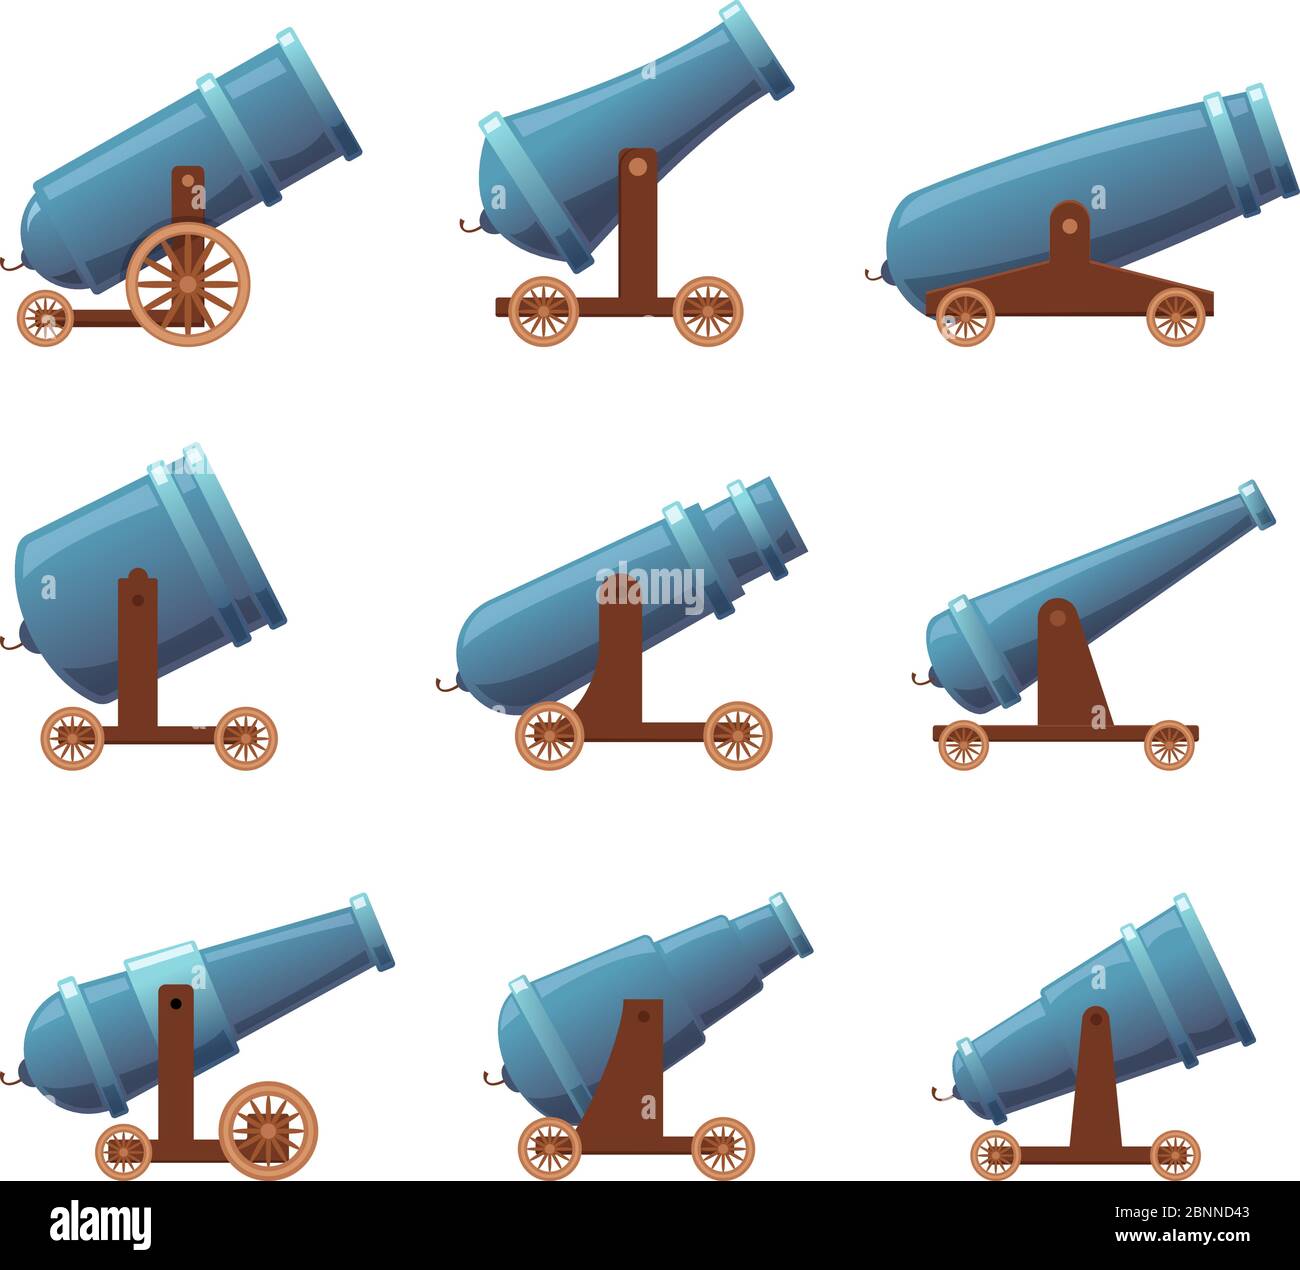 Cannon retro guns. Military pirate aggression artillery heavy medieval ...